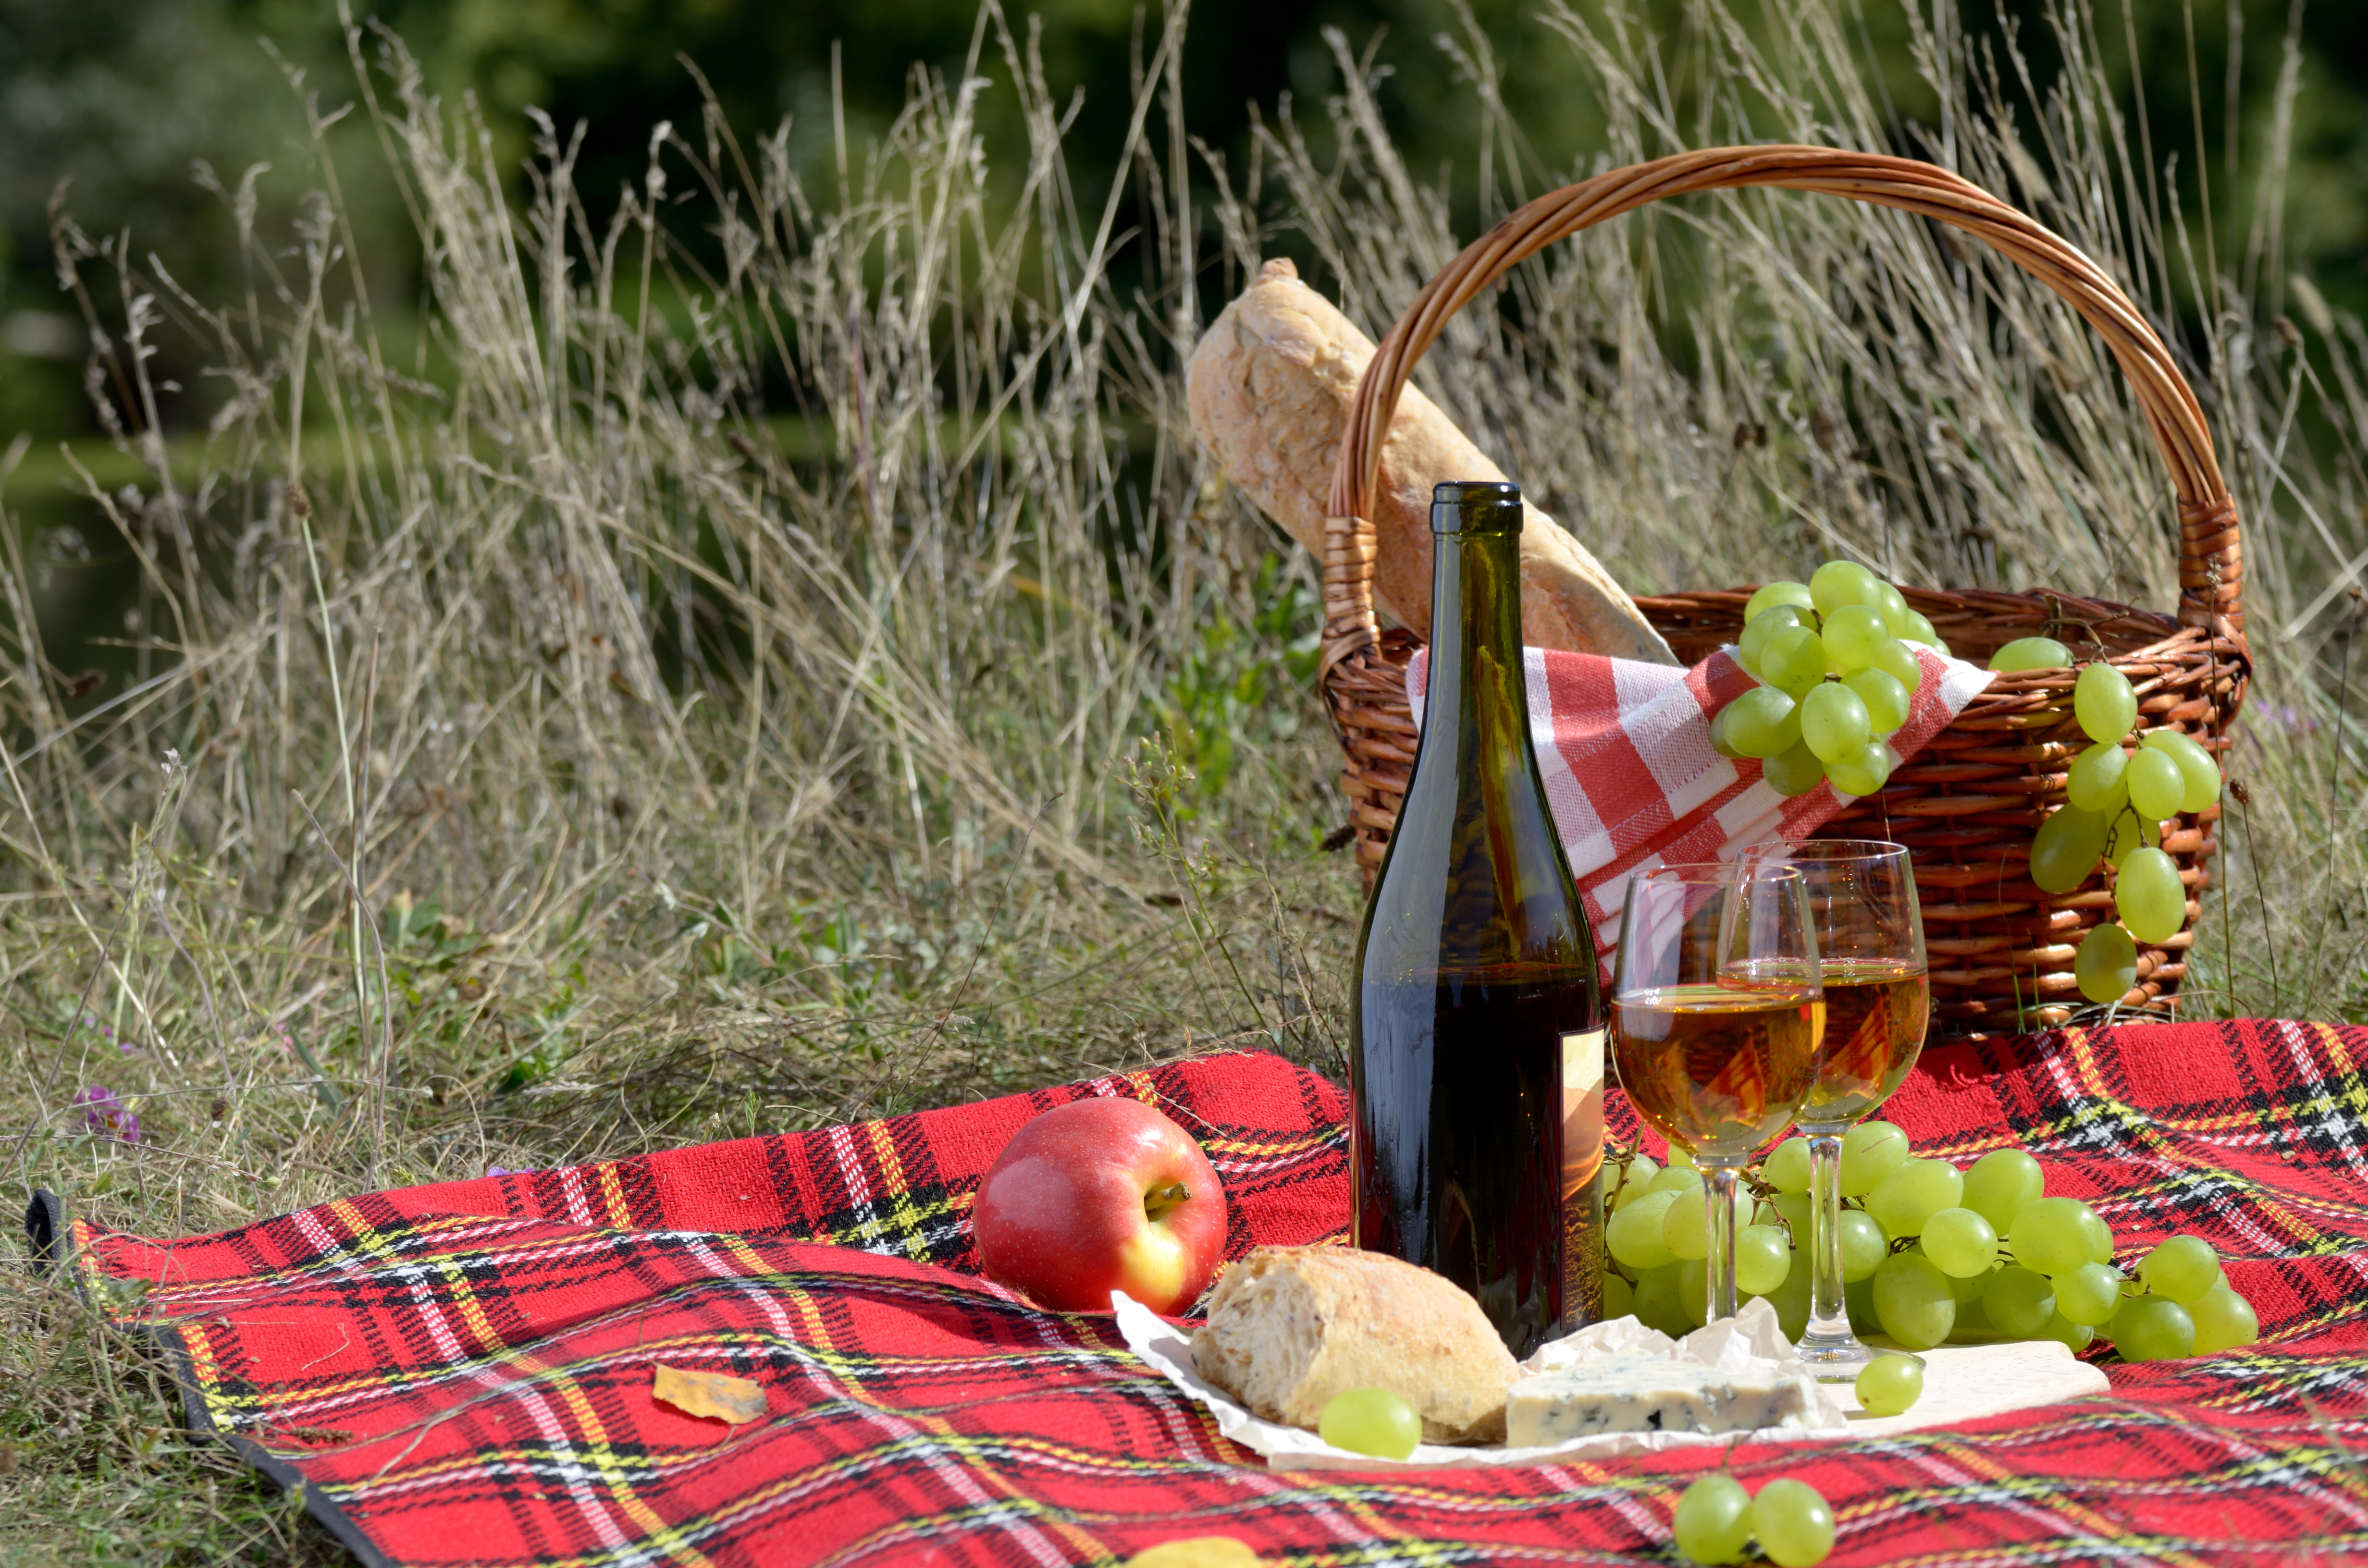 picnic wallpaper,basket,picnic basket,picnic,storage basket,gift basket